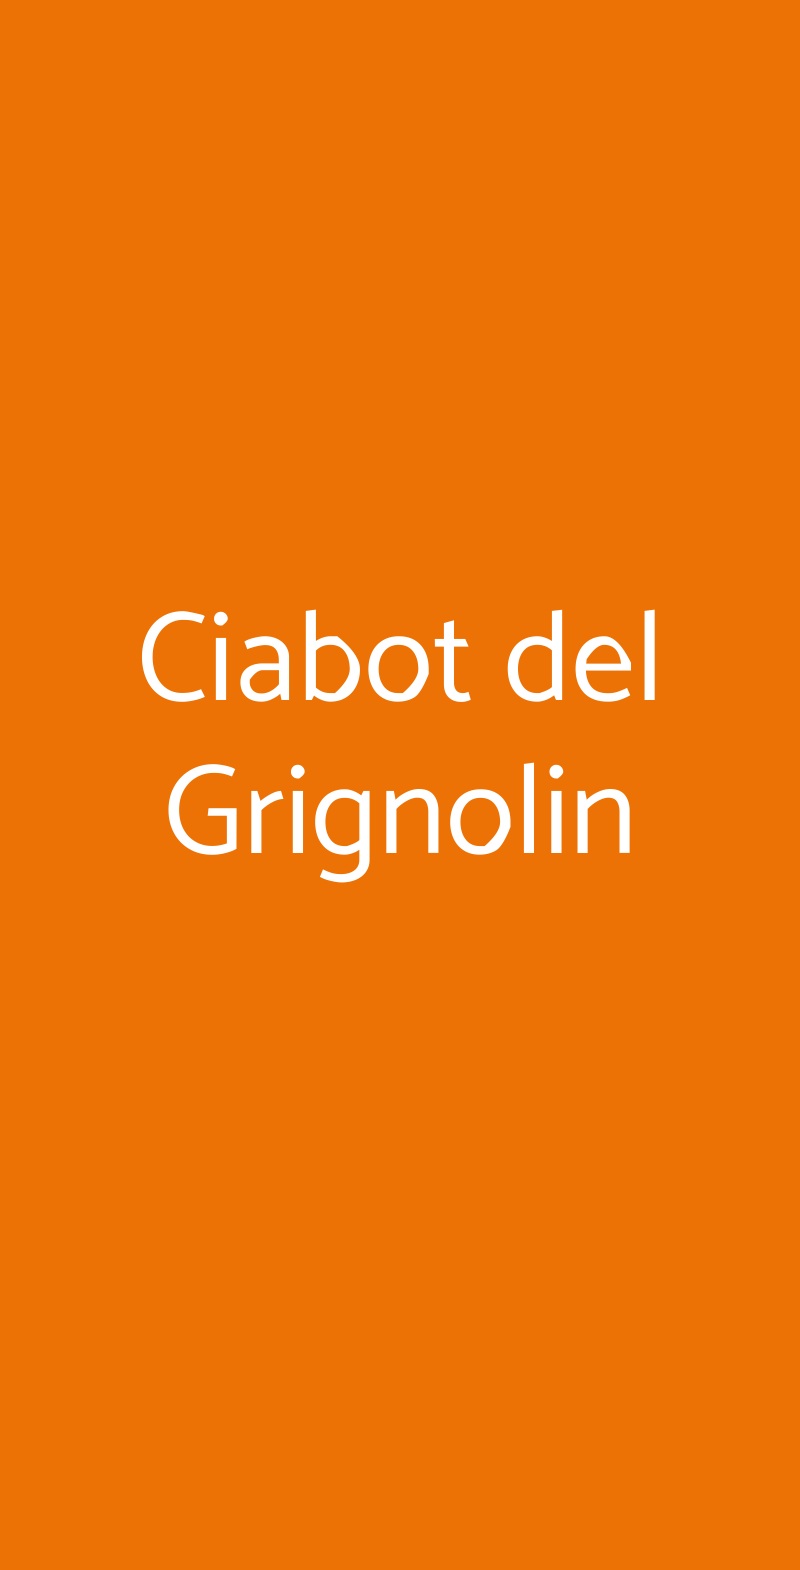 Ciabot del Grignolin Calliano menù 1 pagina